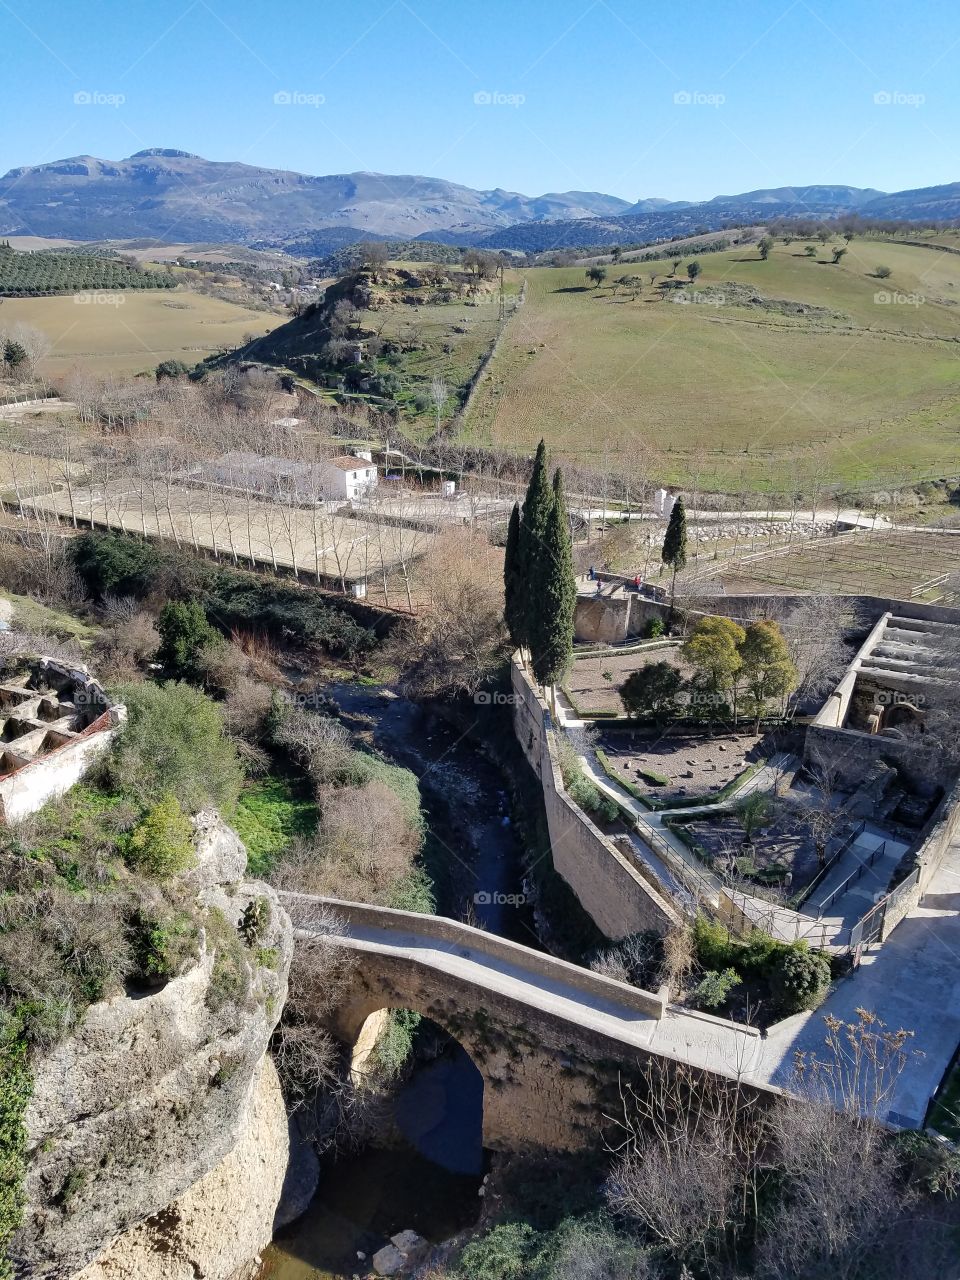 Landscape view in Ronda, Spain